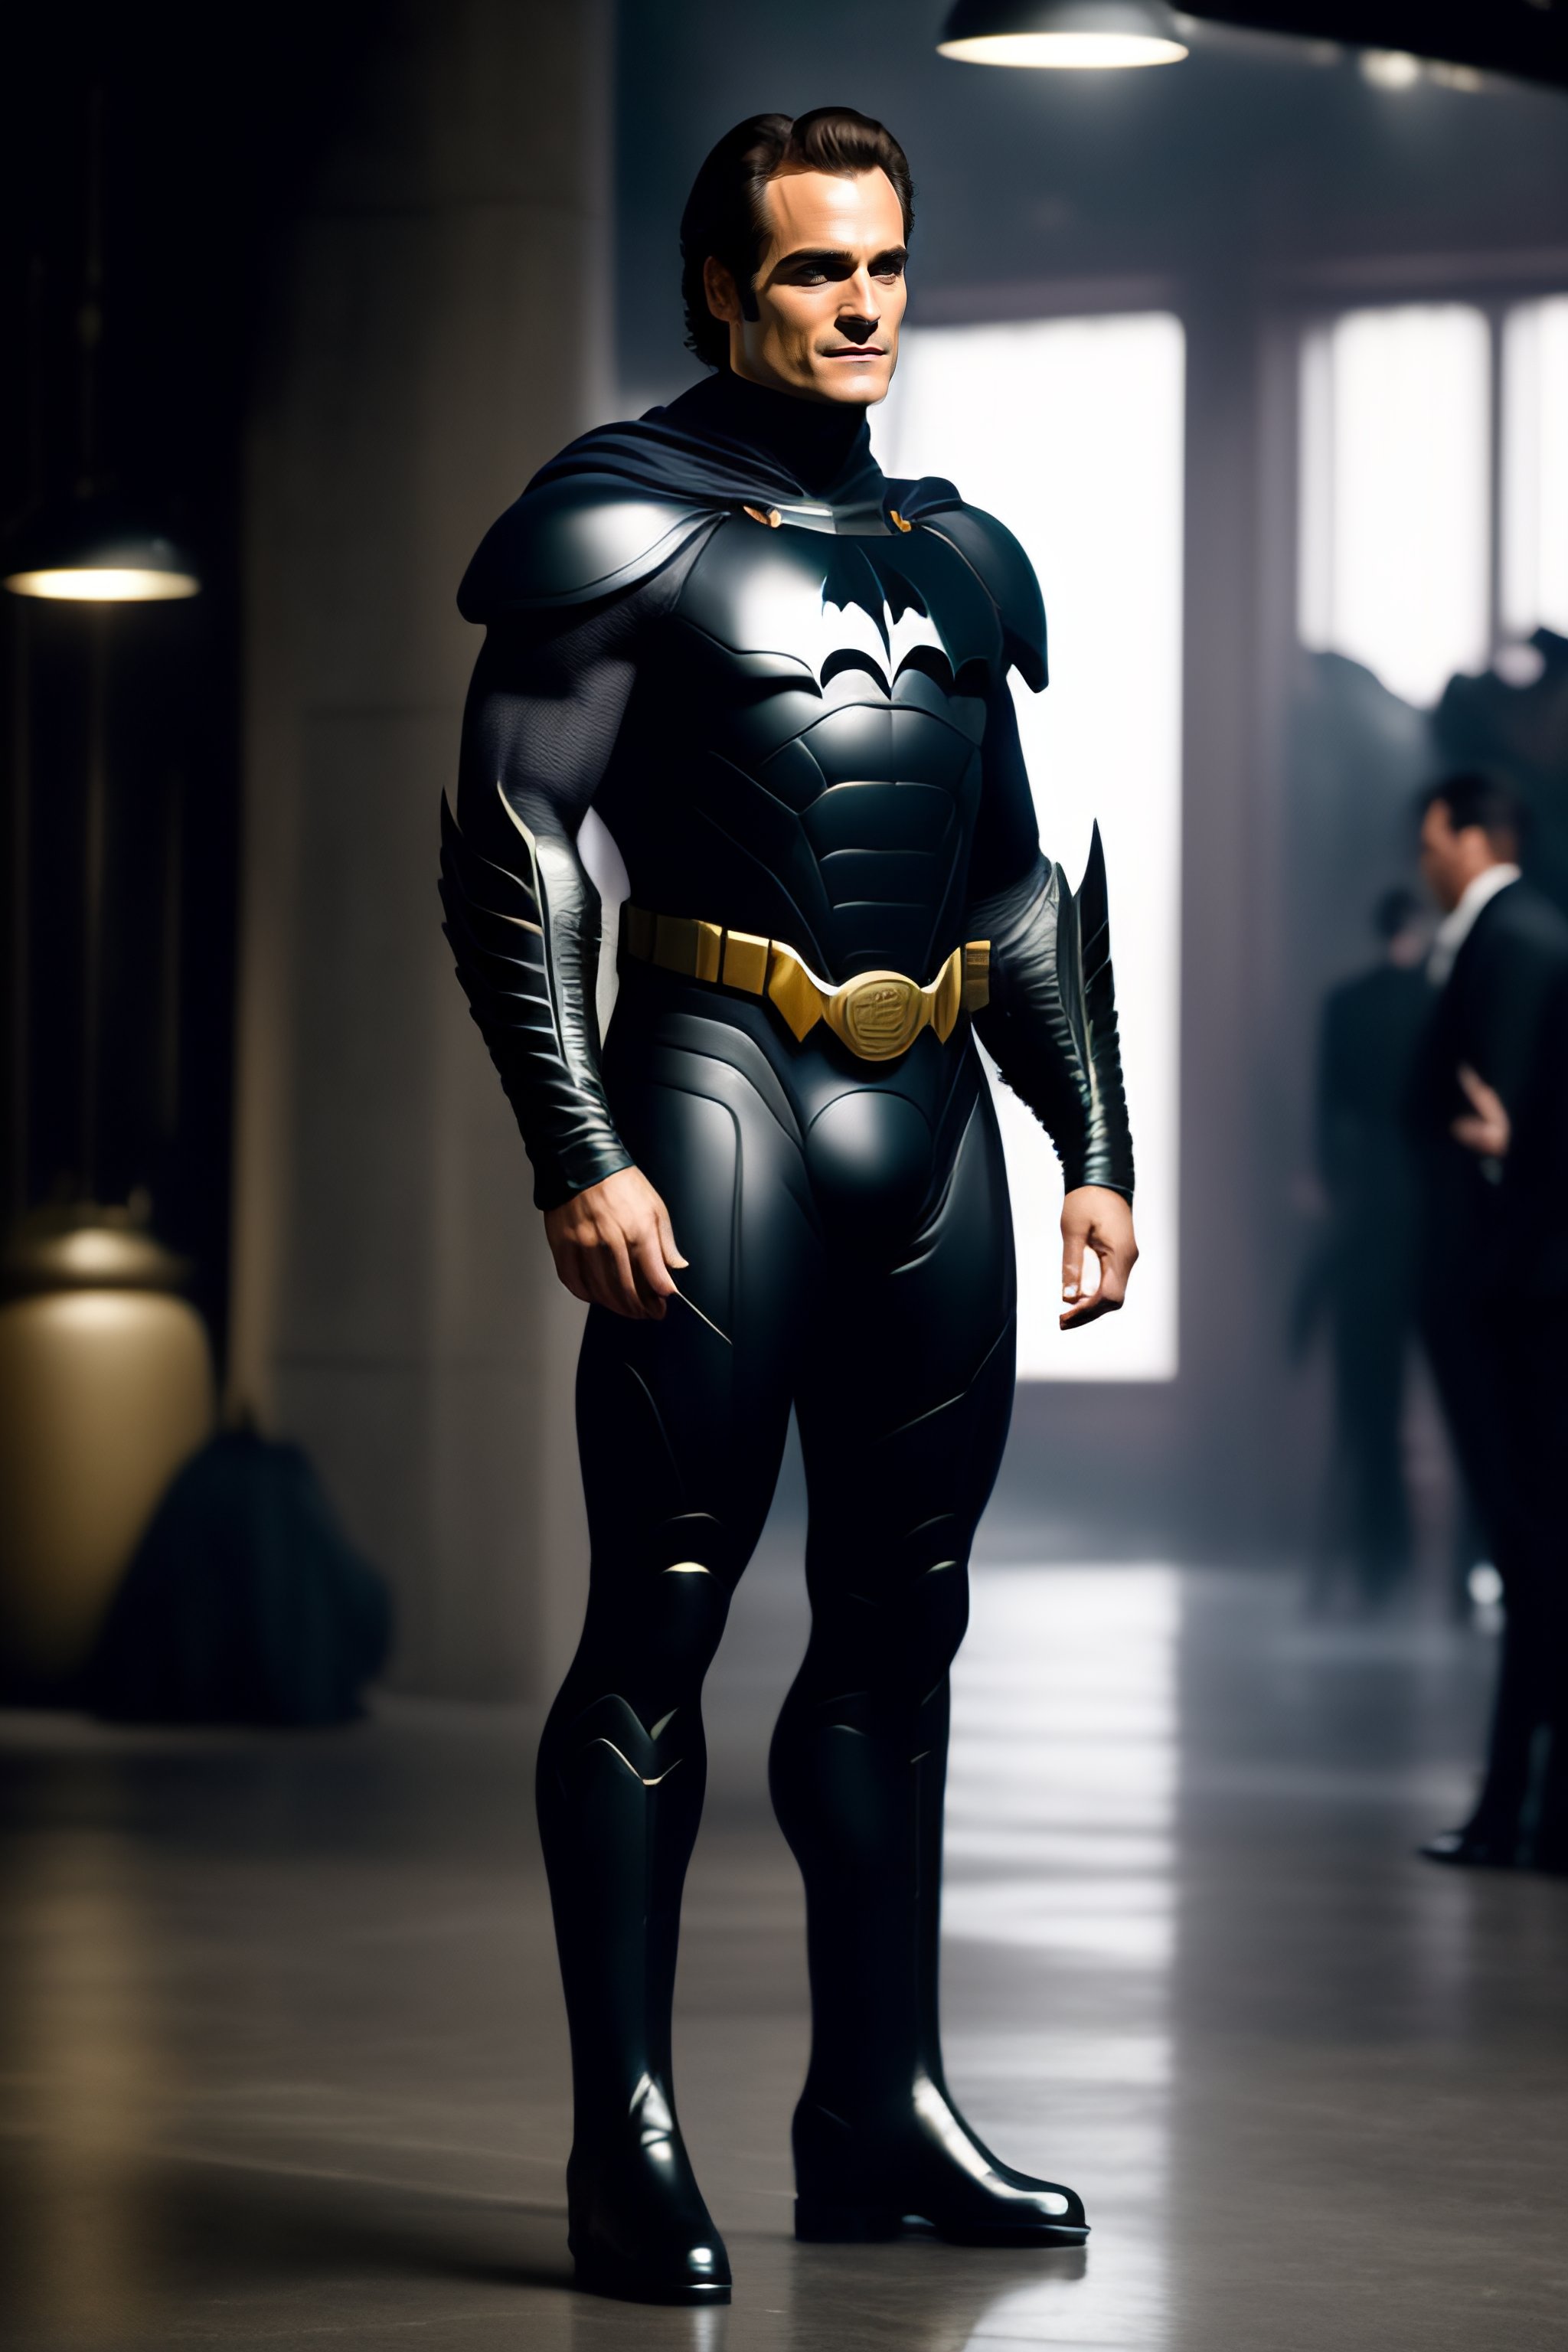 Lexica - Joaquin Phoenix as bruce wayne with batsuit in batman movie, full  body